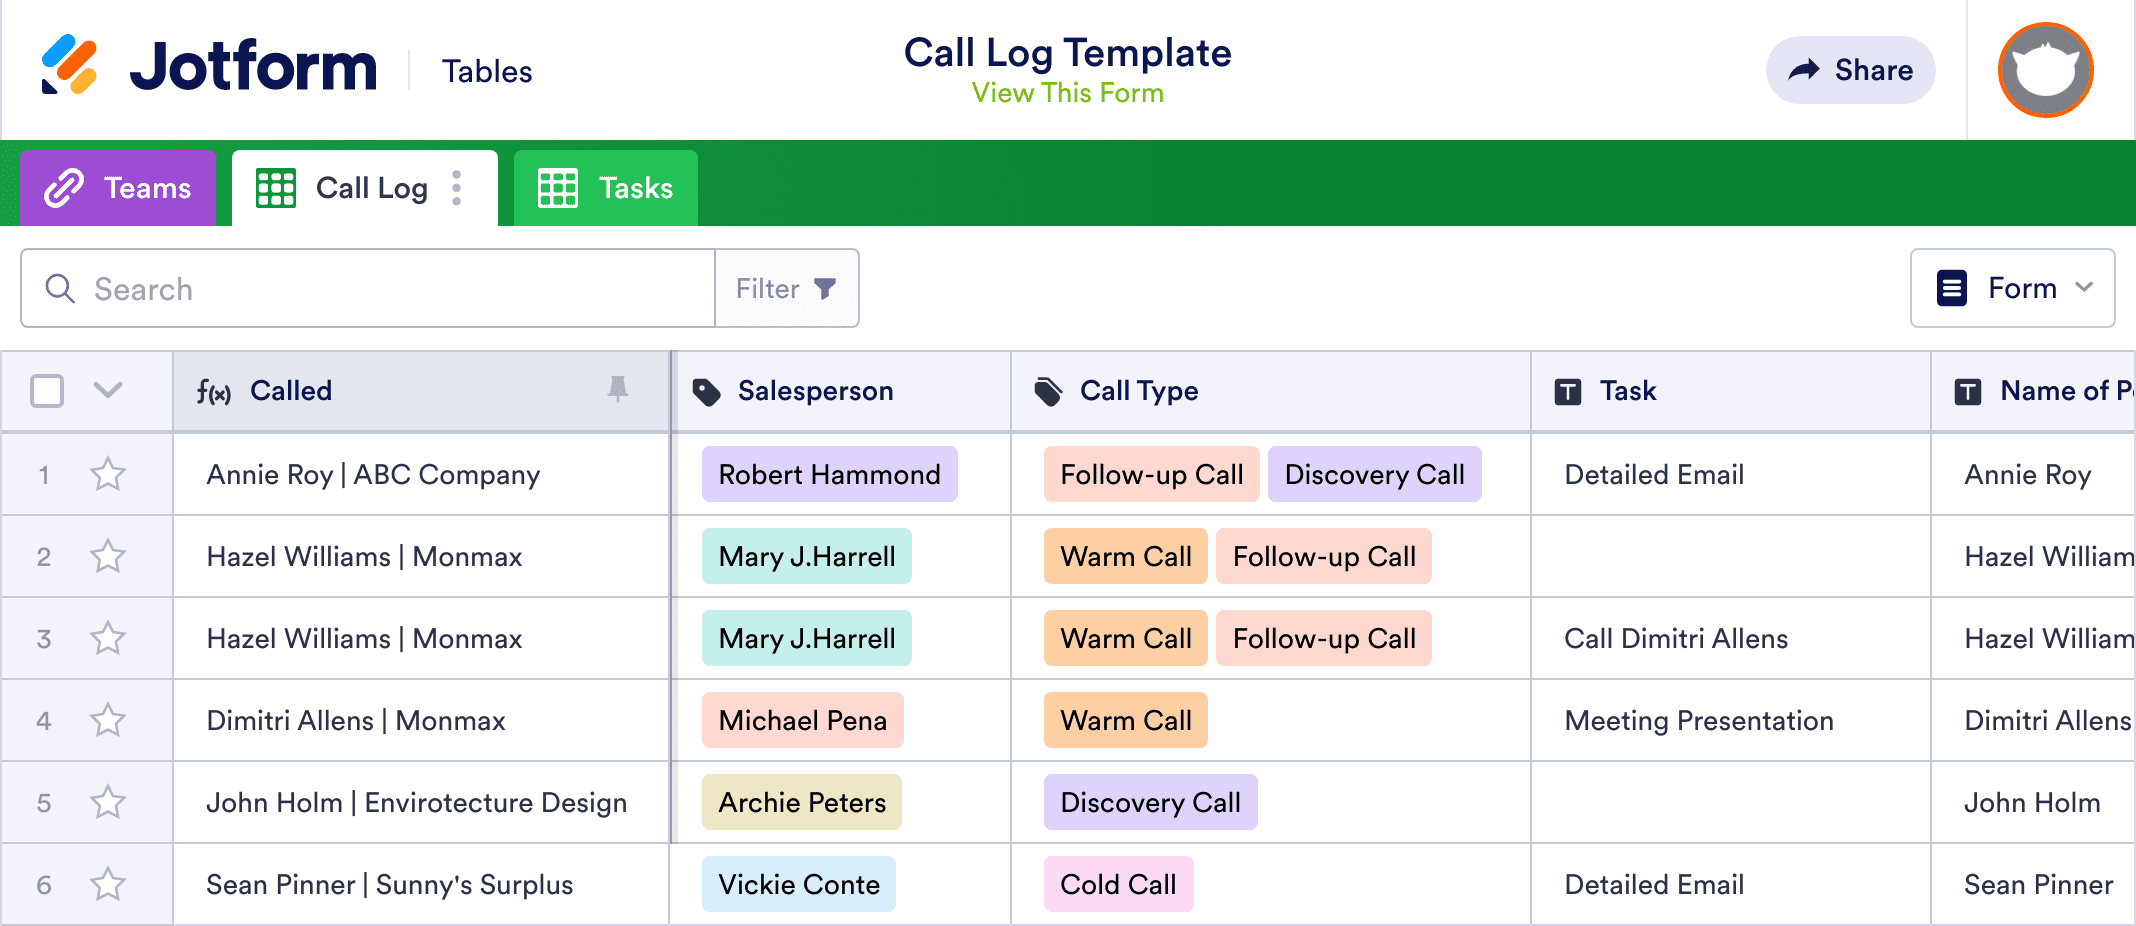 Call Log Template